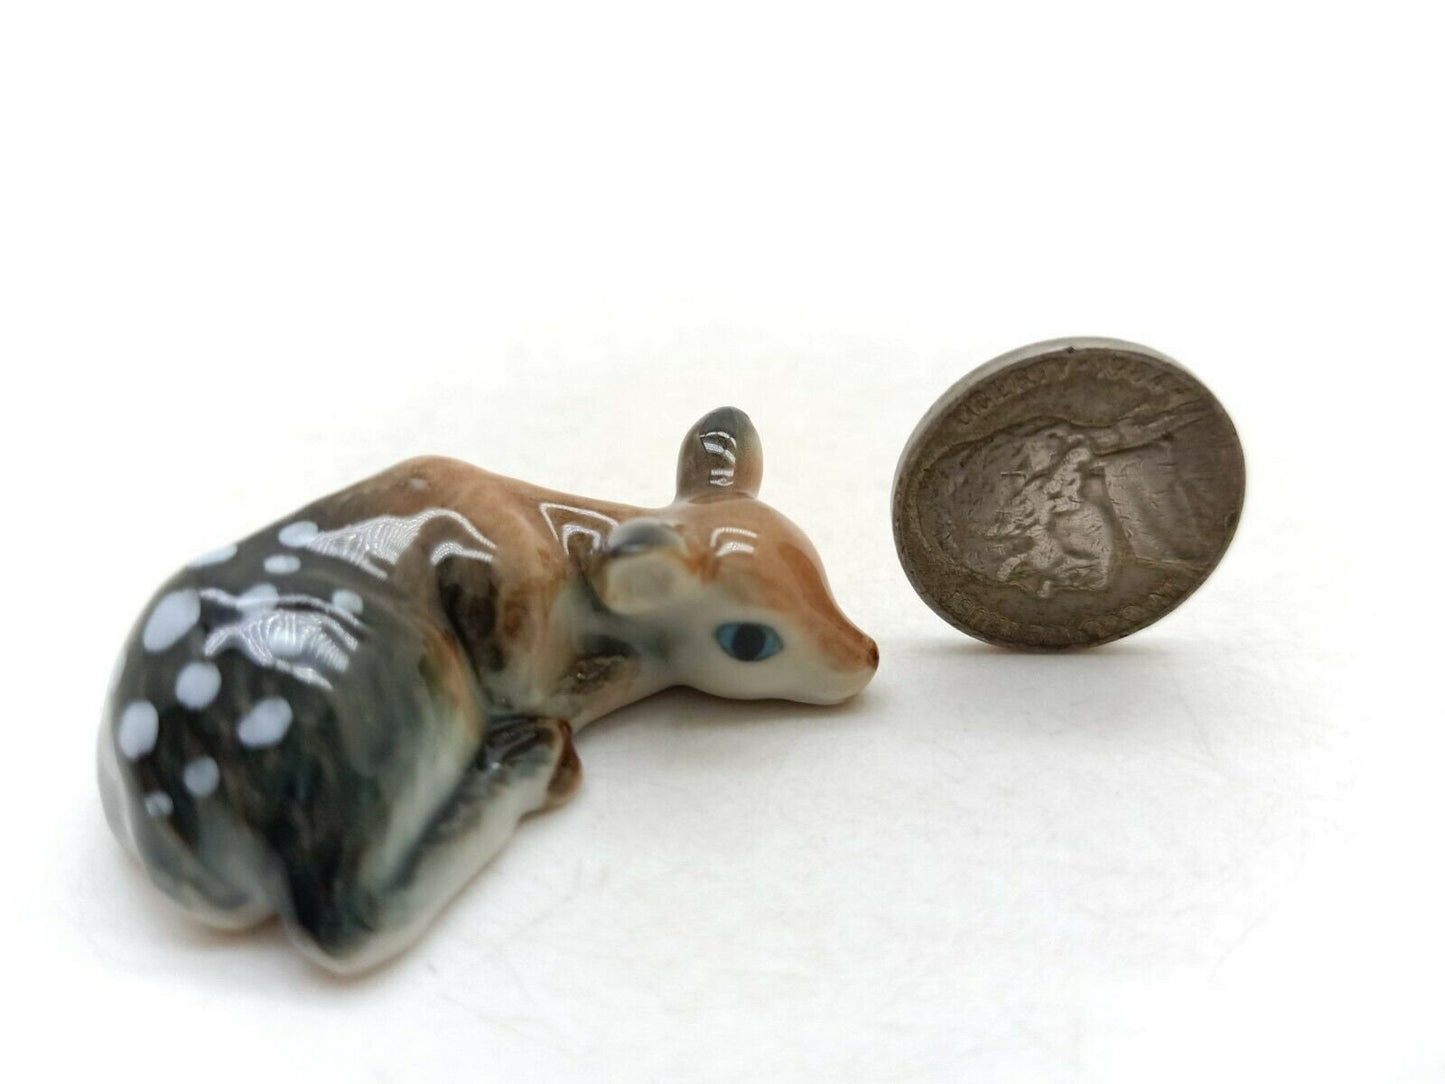 Set of 2 Deer Bambi Figurine Ceramic Animal Miniature Statue